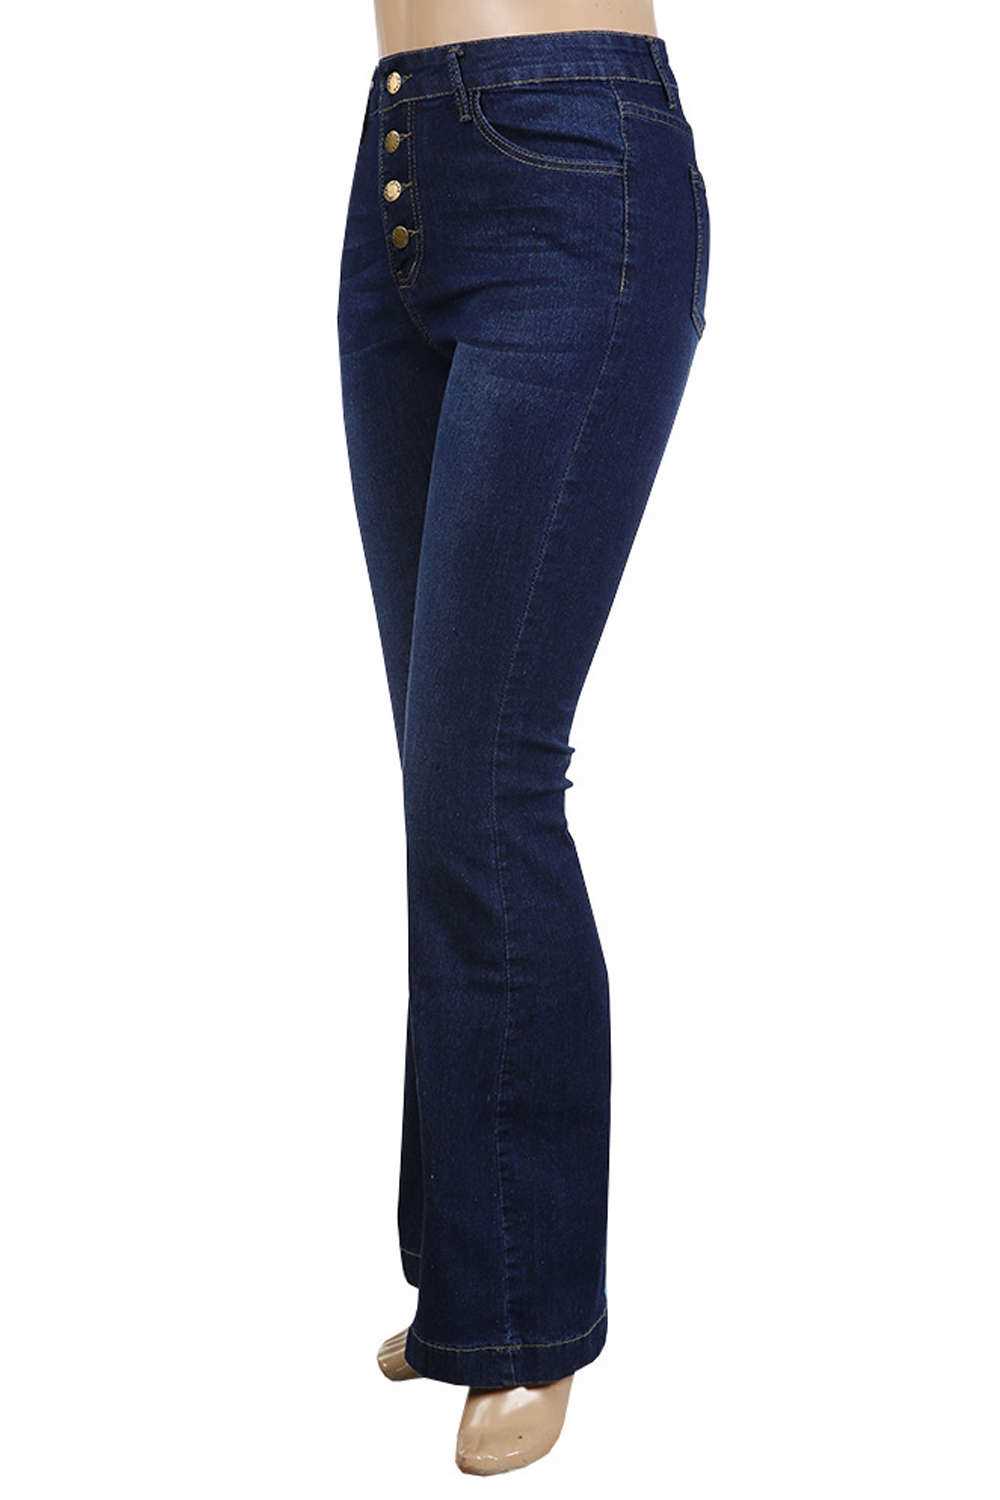 Iyasson Woman's Skinny Bell-bottom Pants Jeans